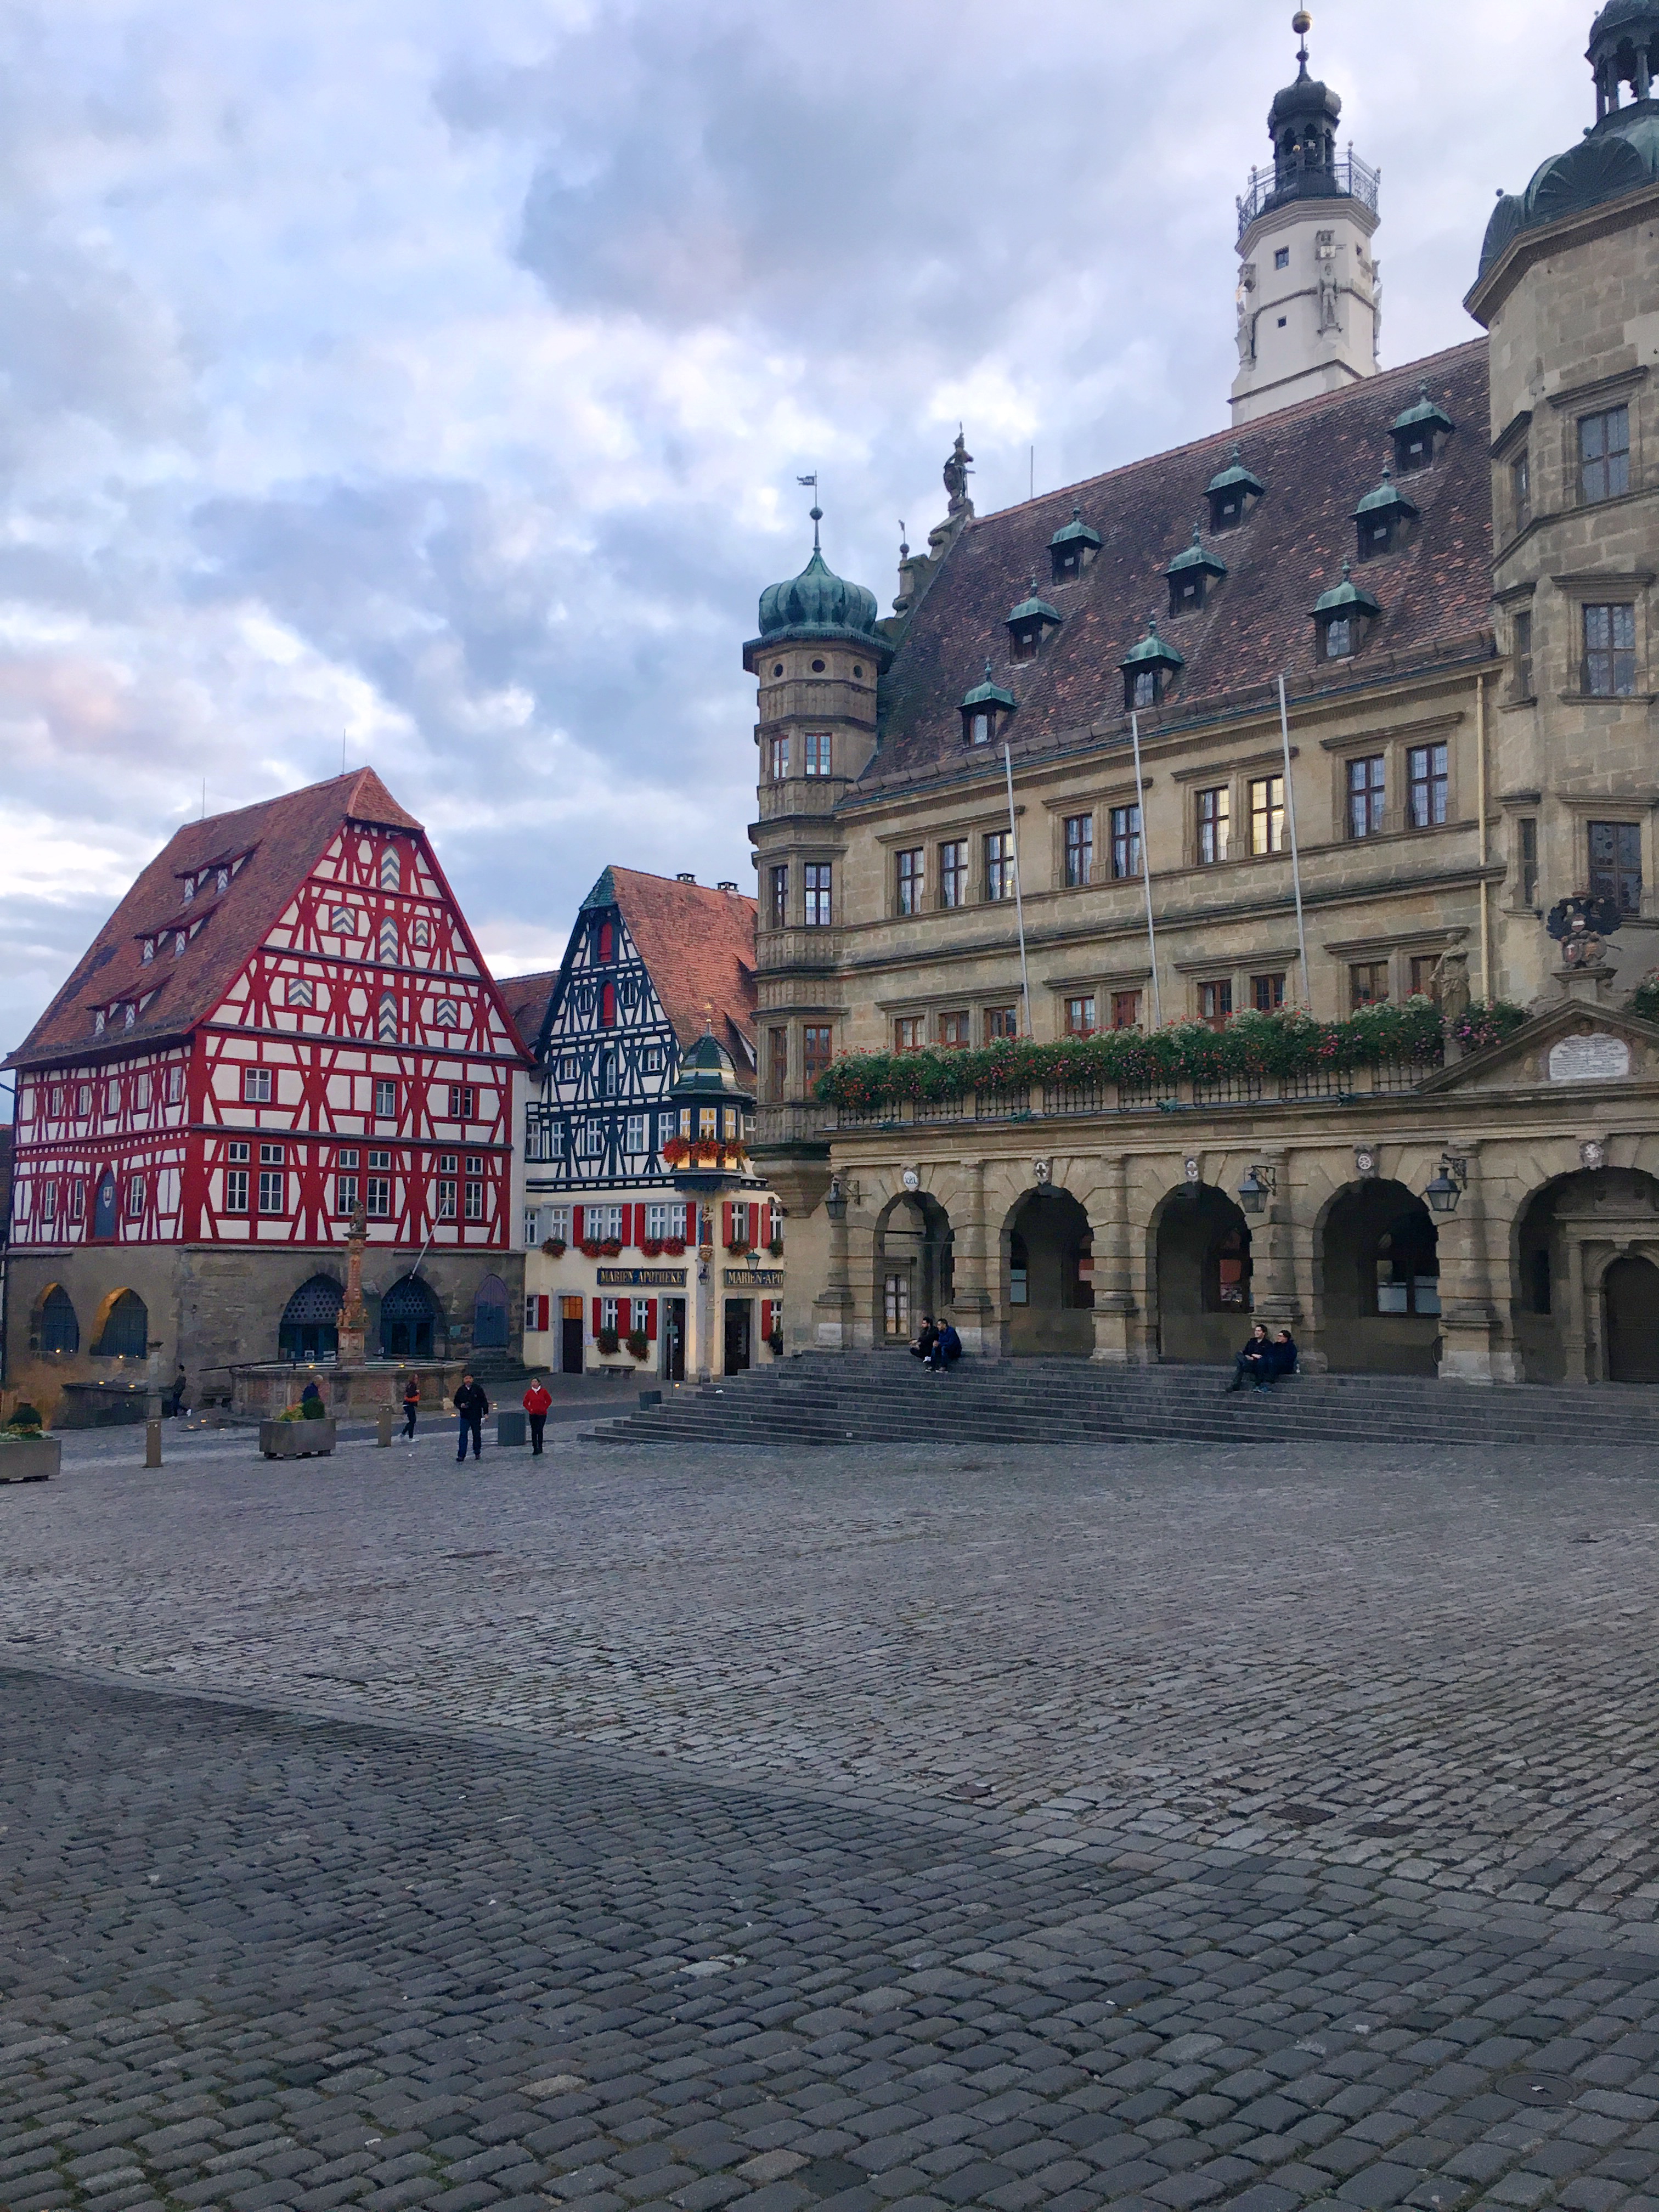 Rothenburg Market Square